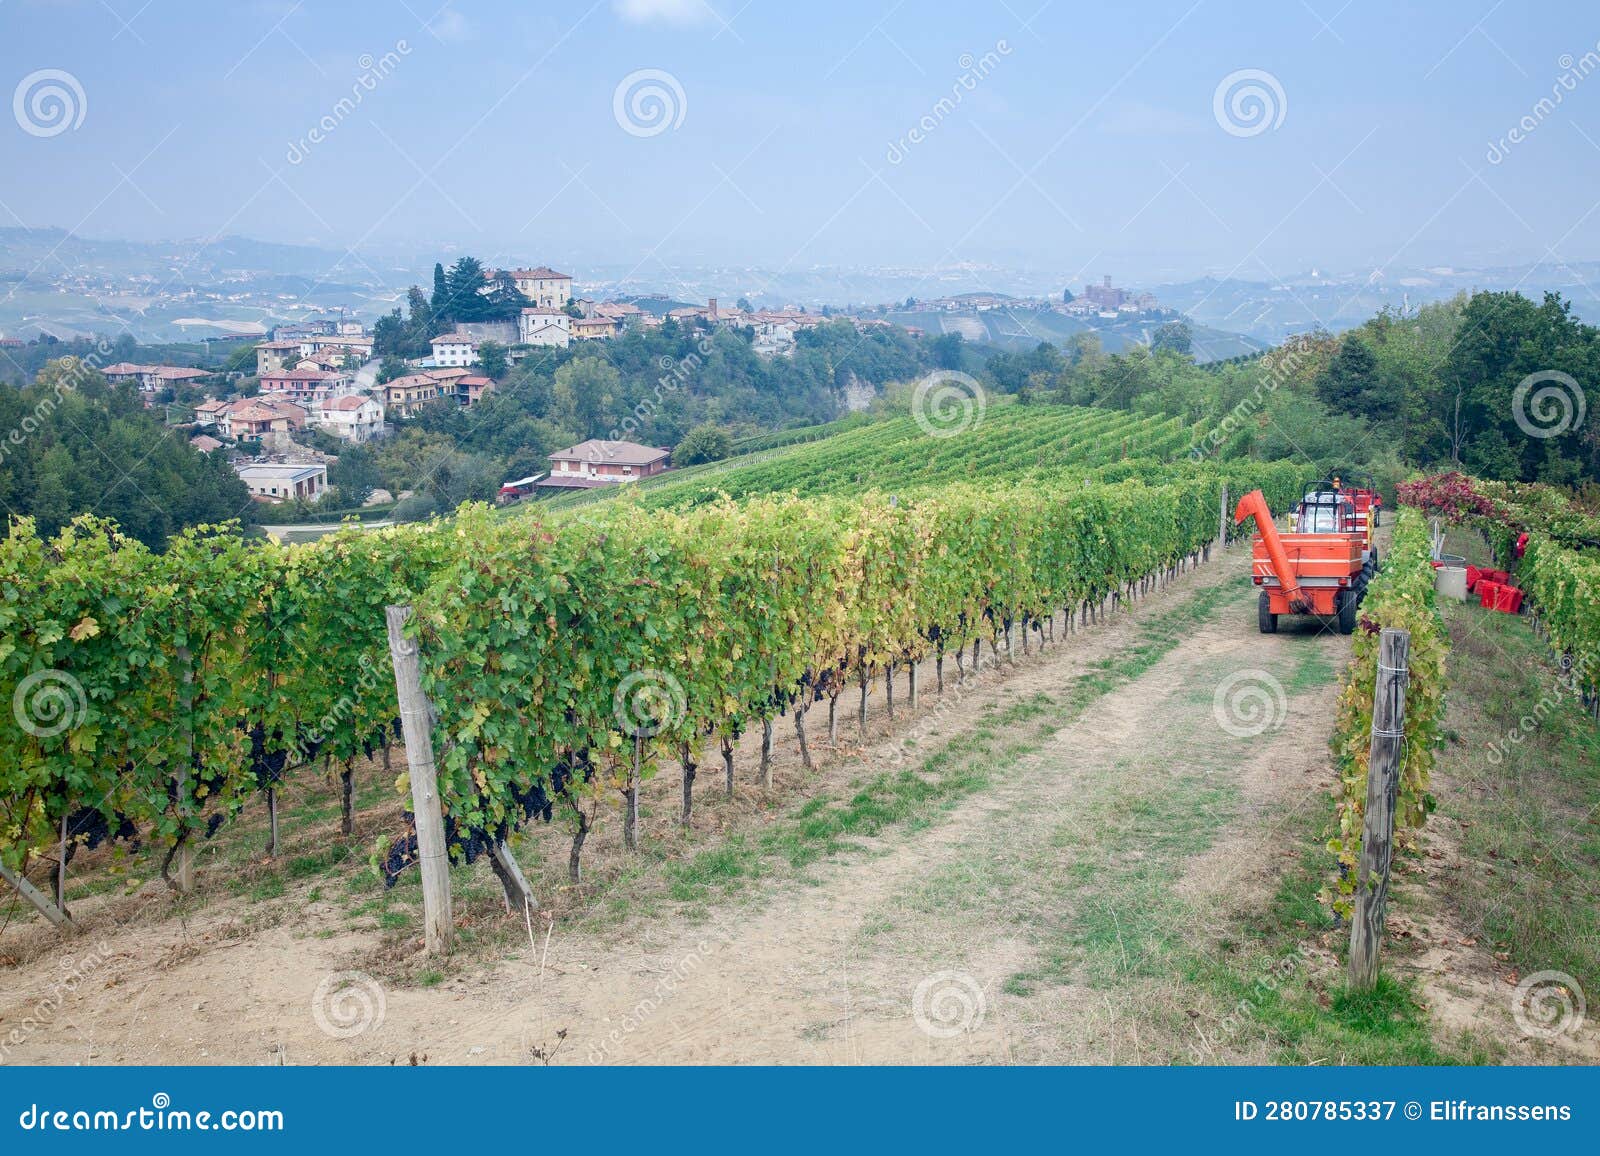 grape harvesting, piedmont, italy